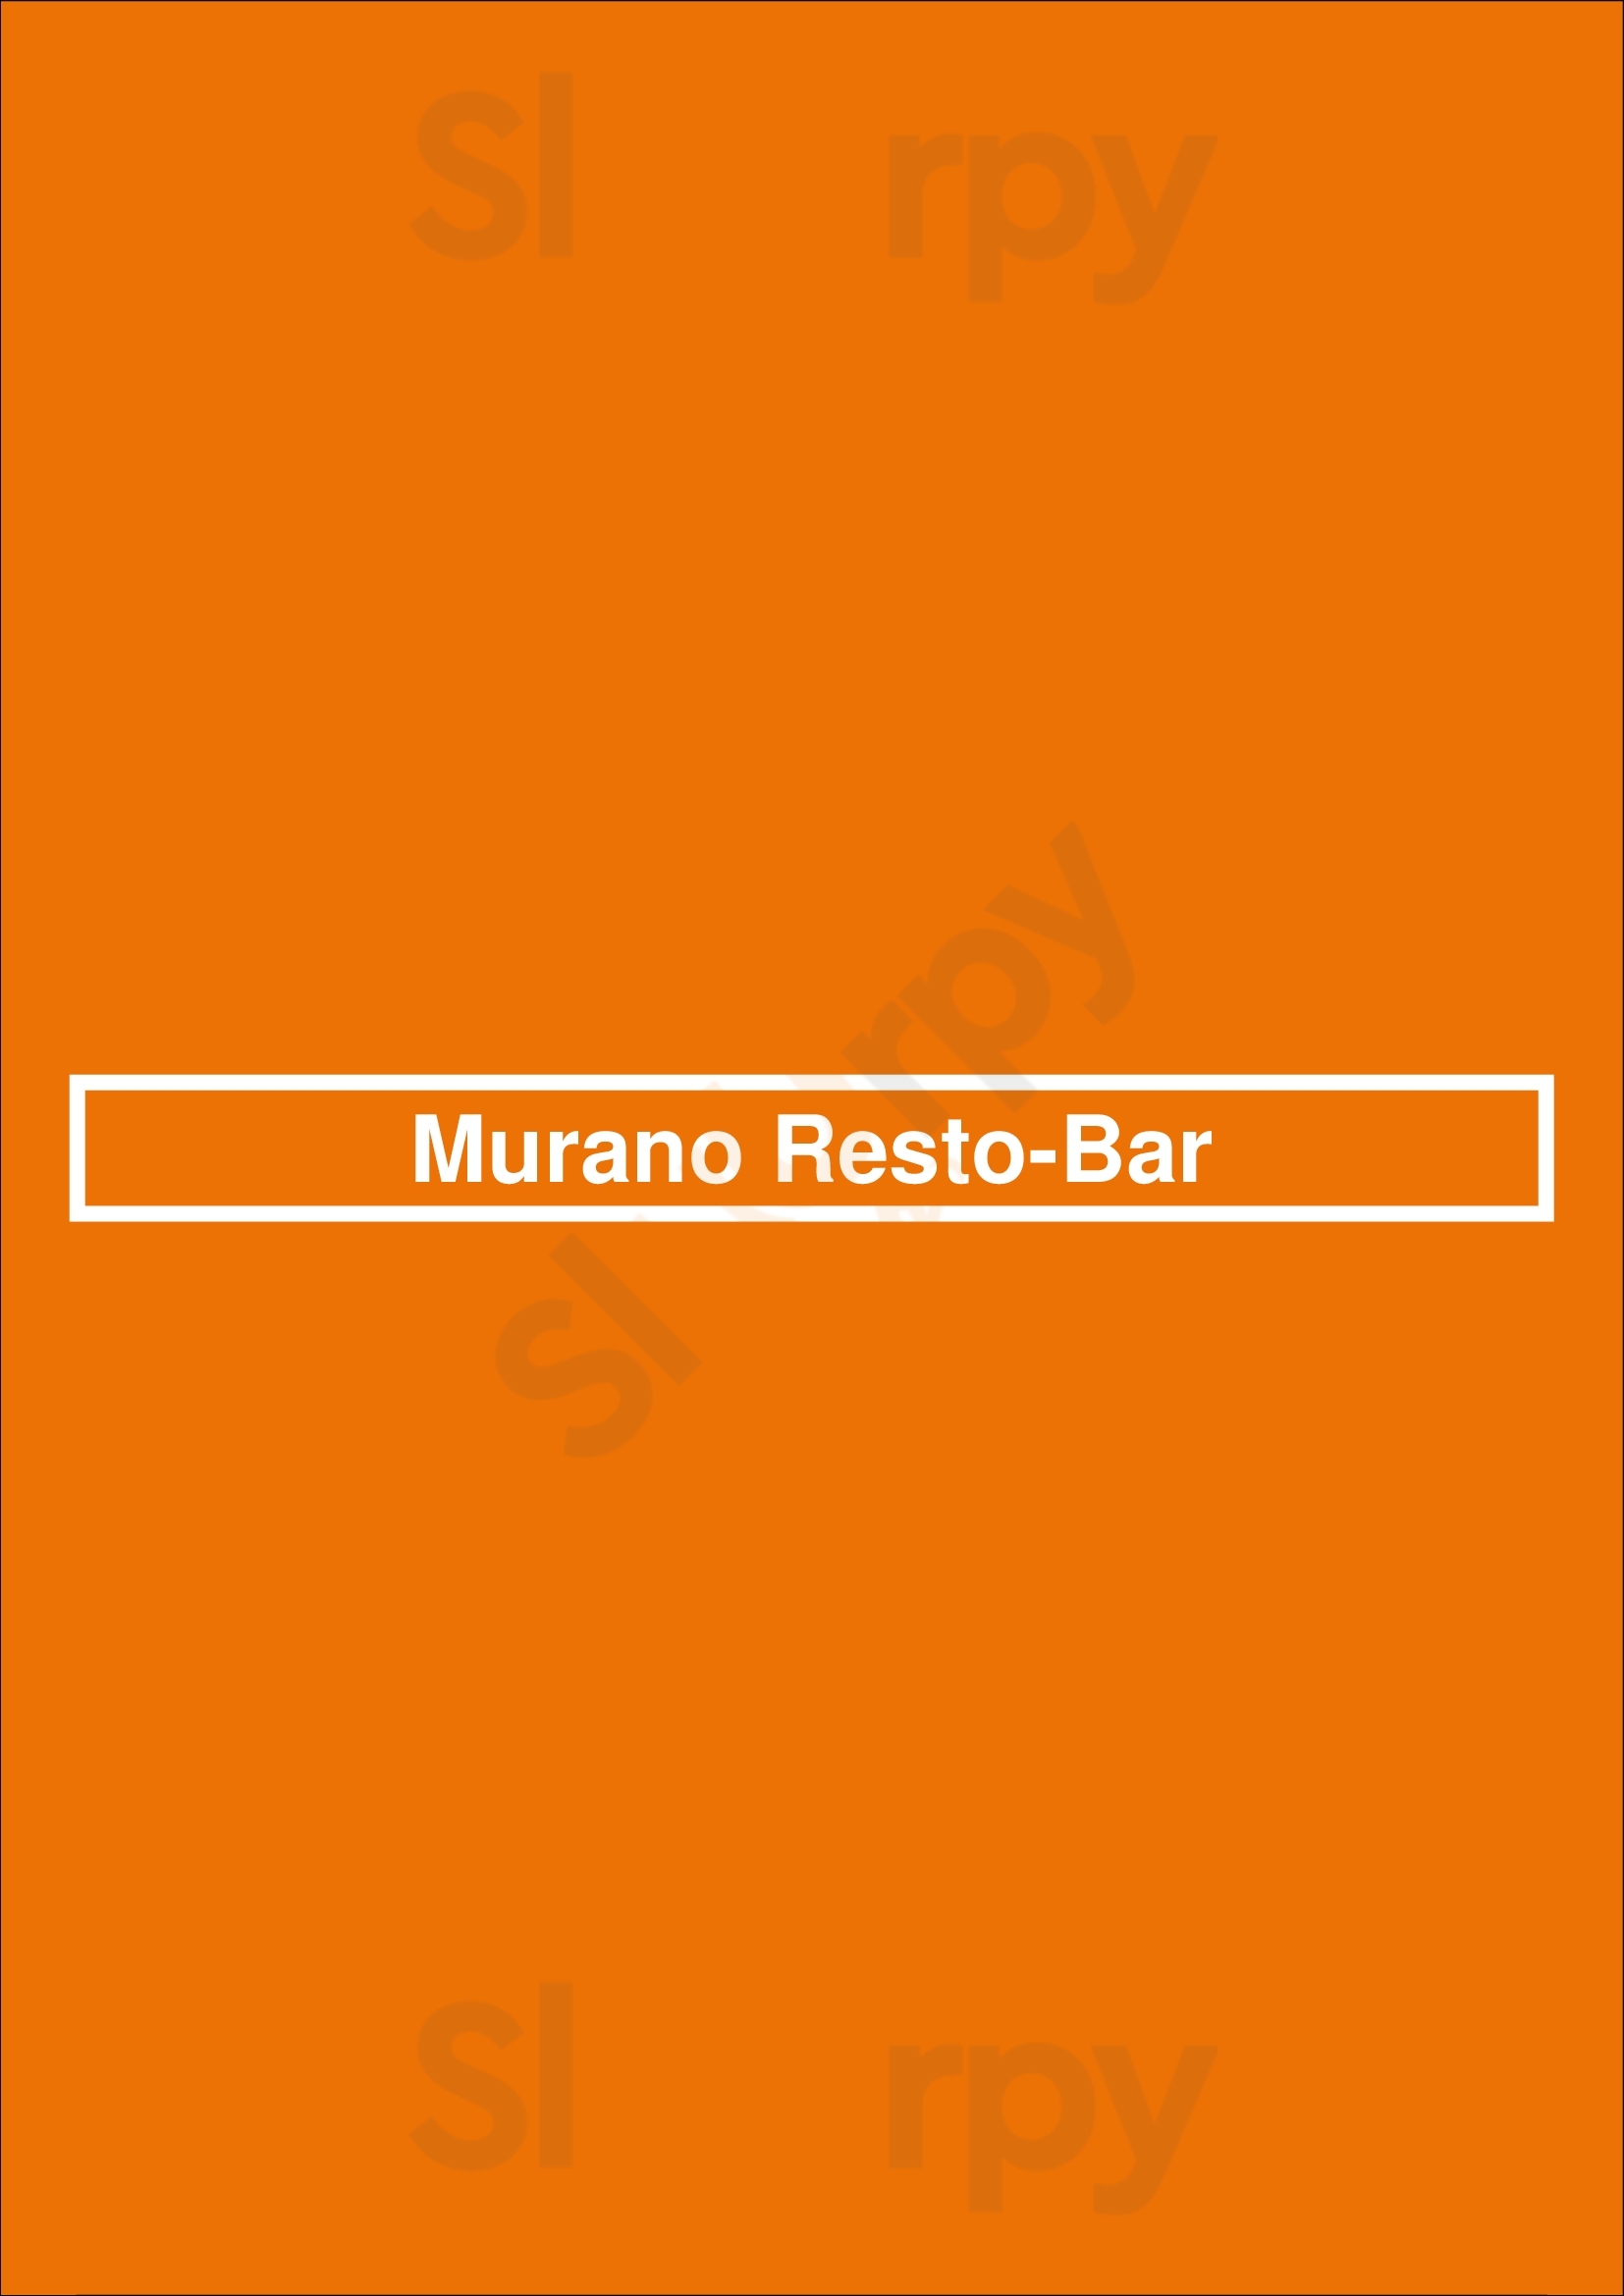 Murano Resto-bar Madrid Menu - 1